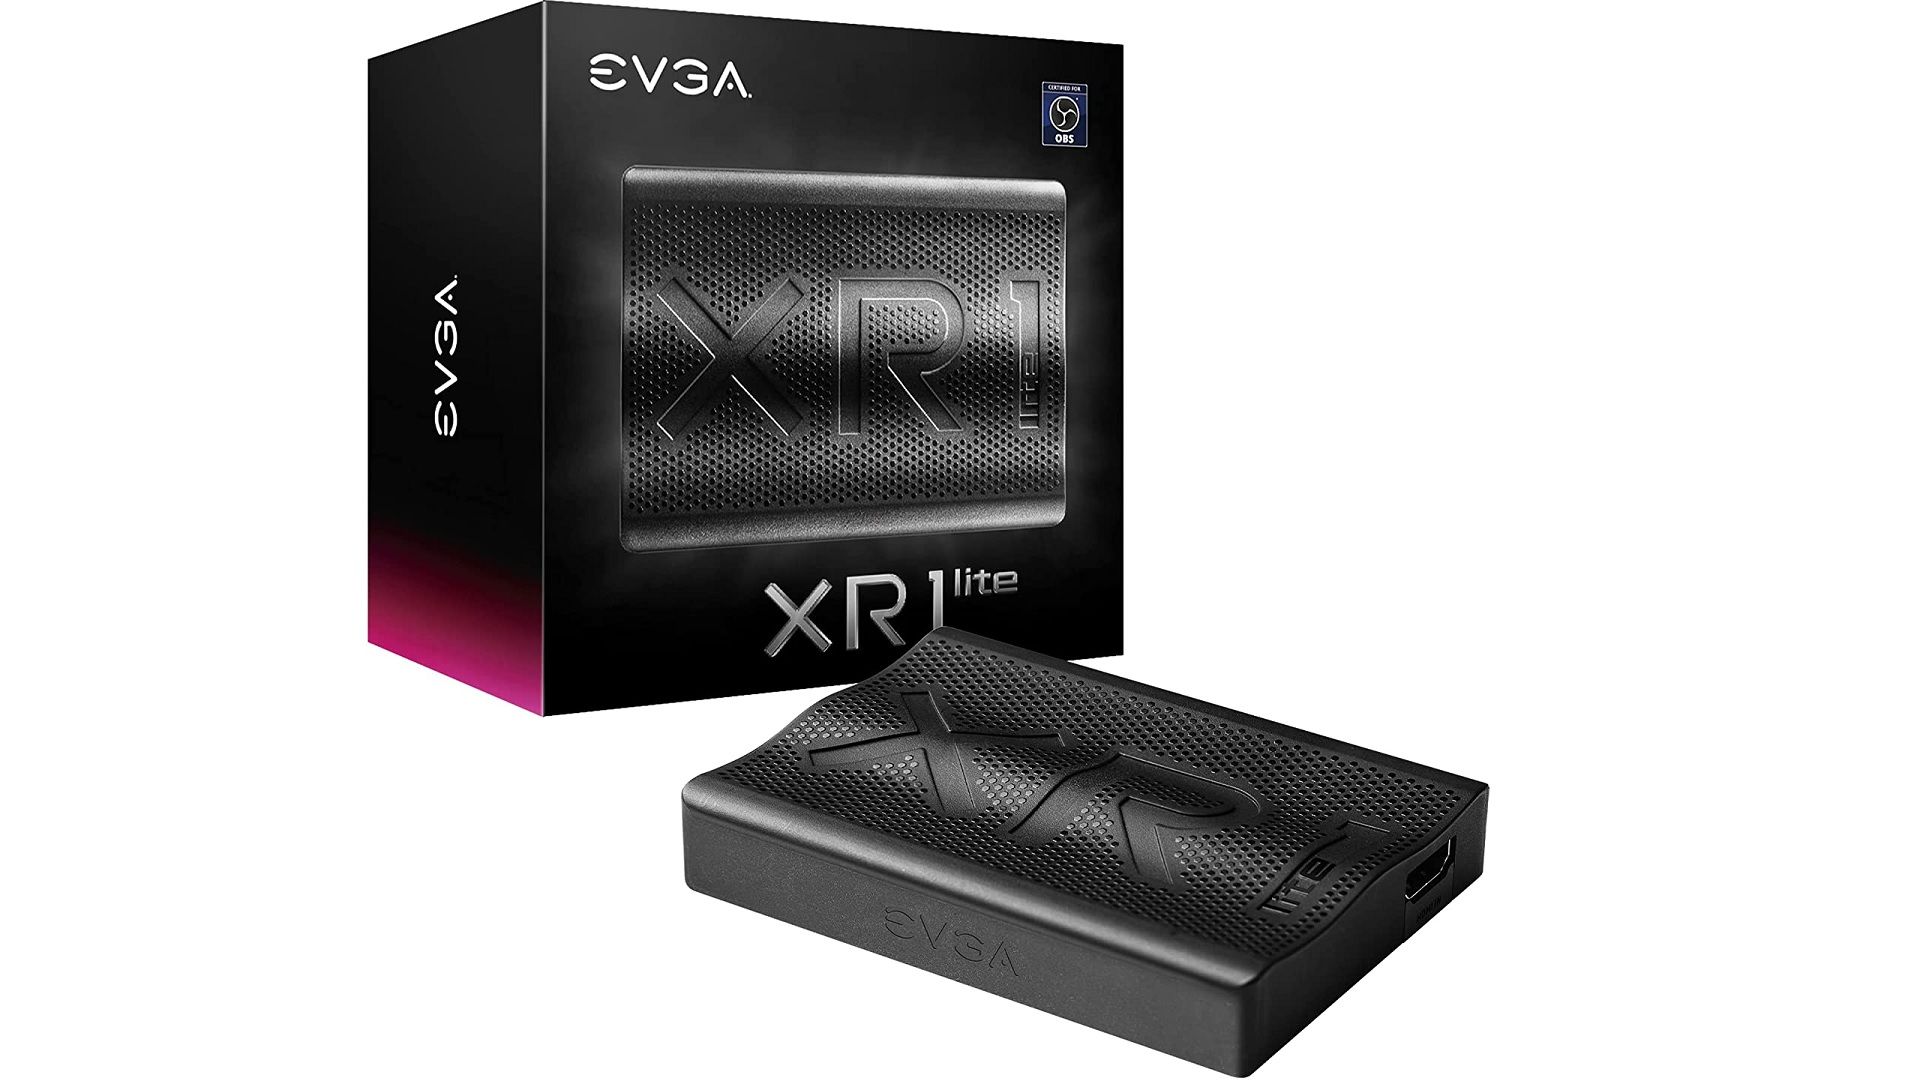 the evga xr1 lite alongside its packaging